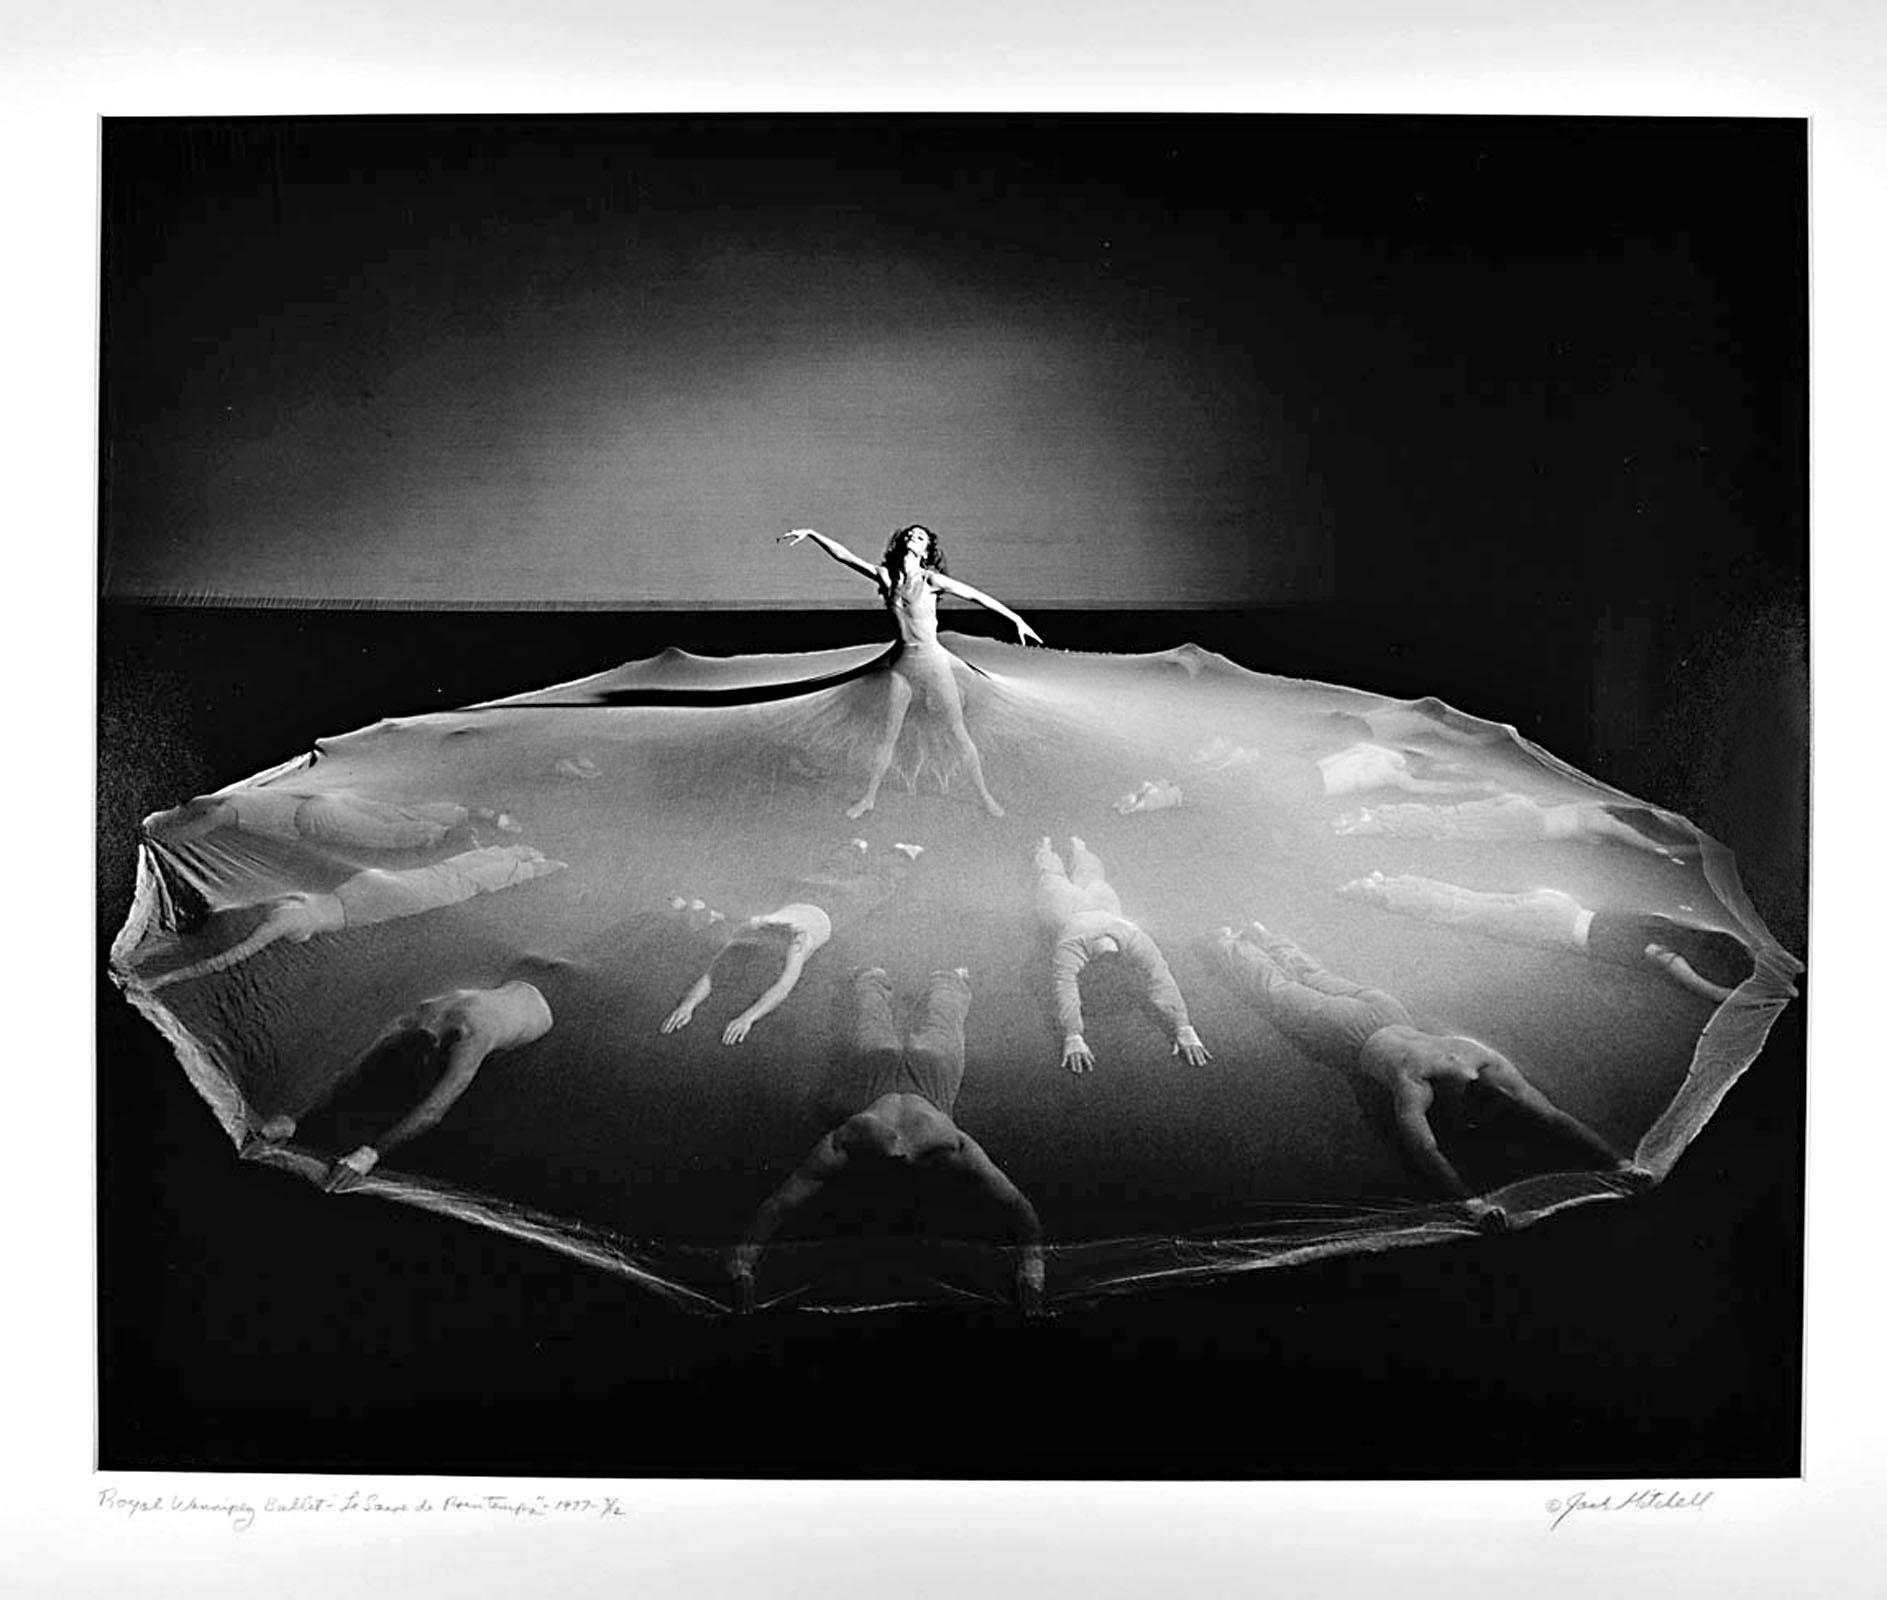 Jack Mitchell Black and White Photograph - Royal Winnipeg Ballet performing 'Le Sac du Printemps', signed exhibition print